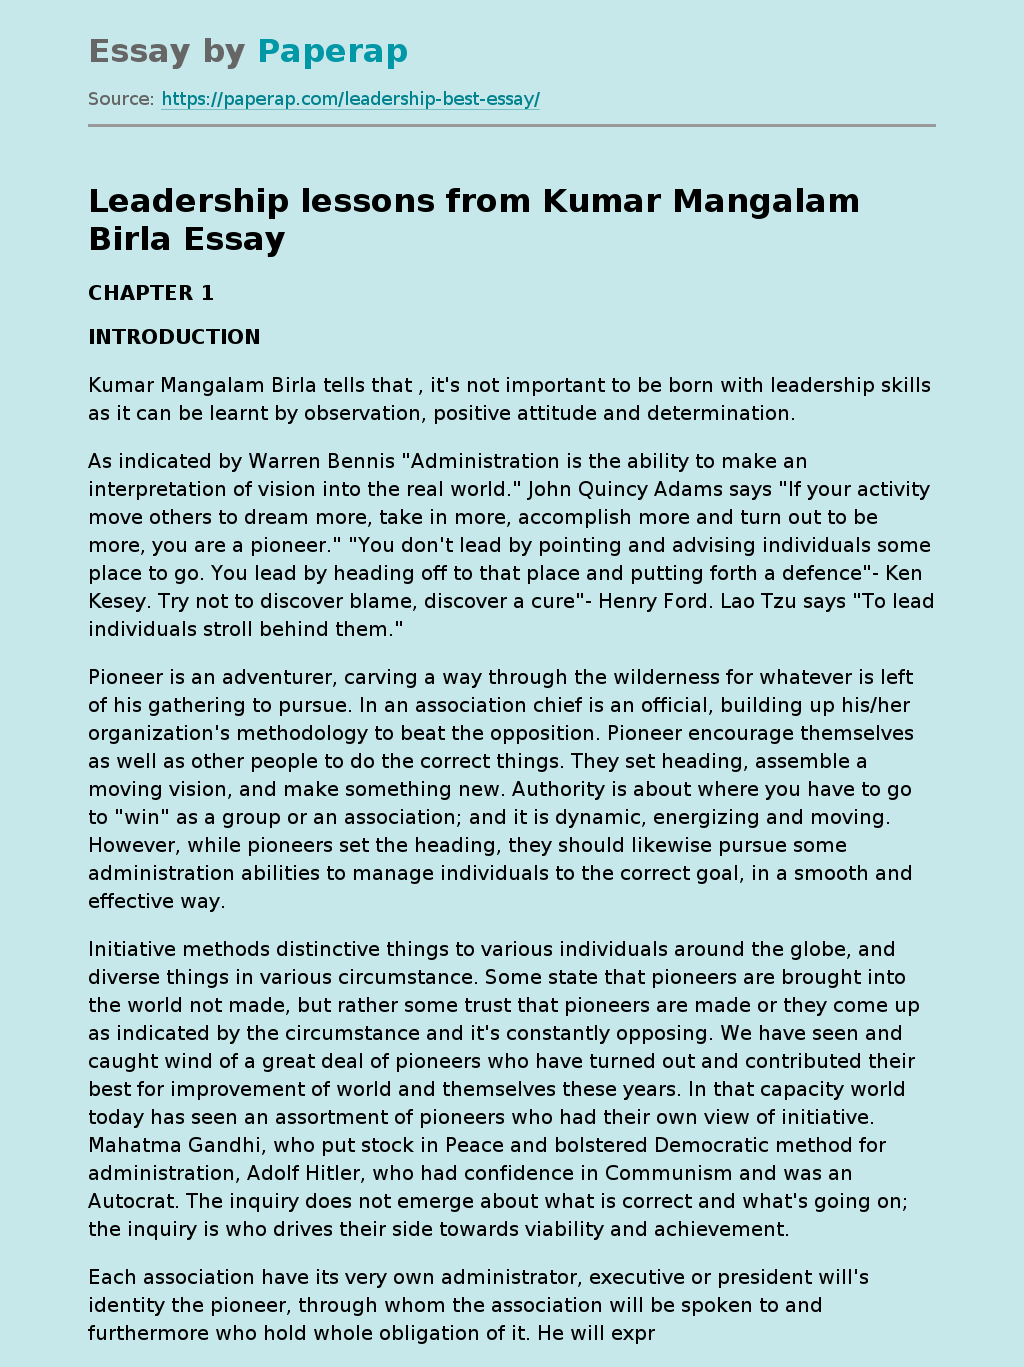 Leadership lessons from Kumar Mangalam Birla